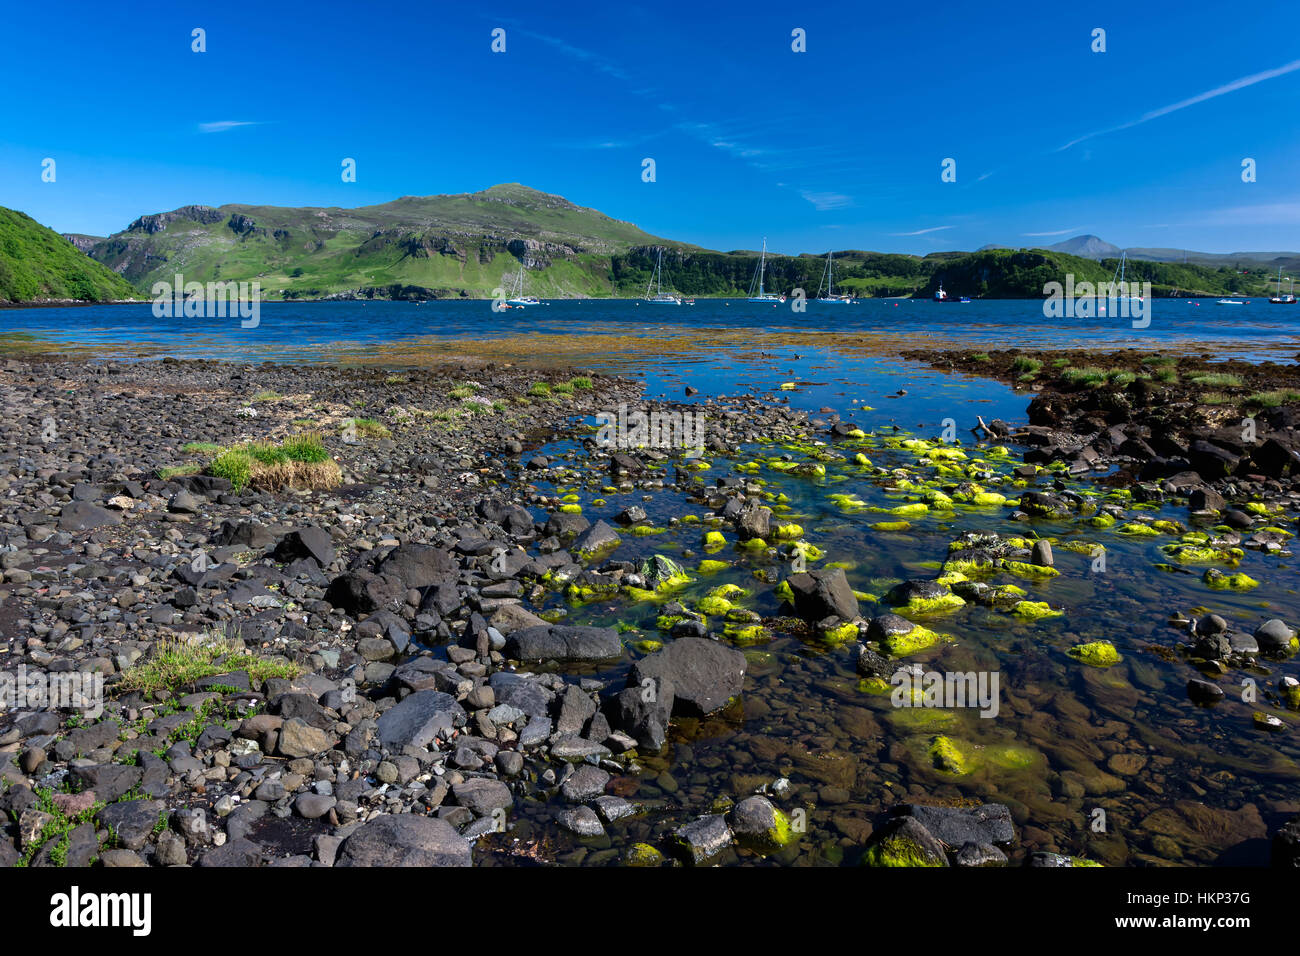 Ben tianavaig, Portree, Isle of Skye, Scotland, united kingdom Banque D'Images